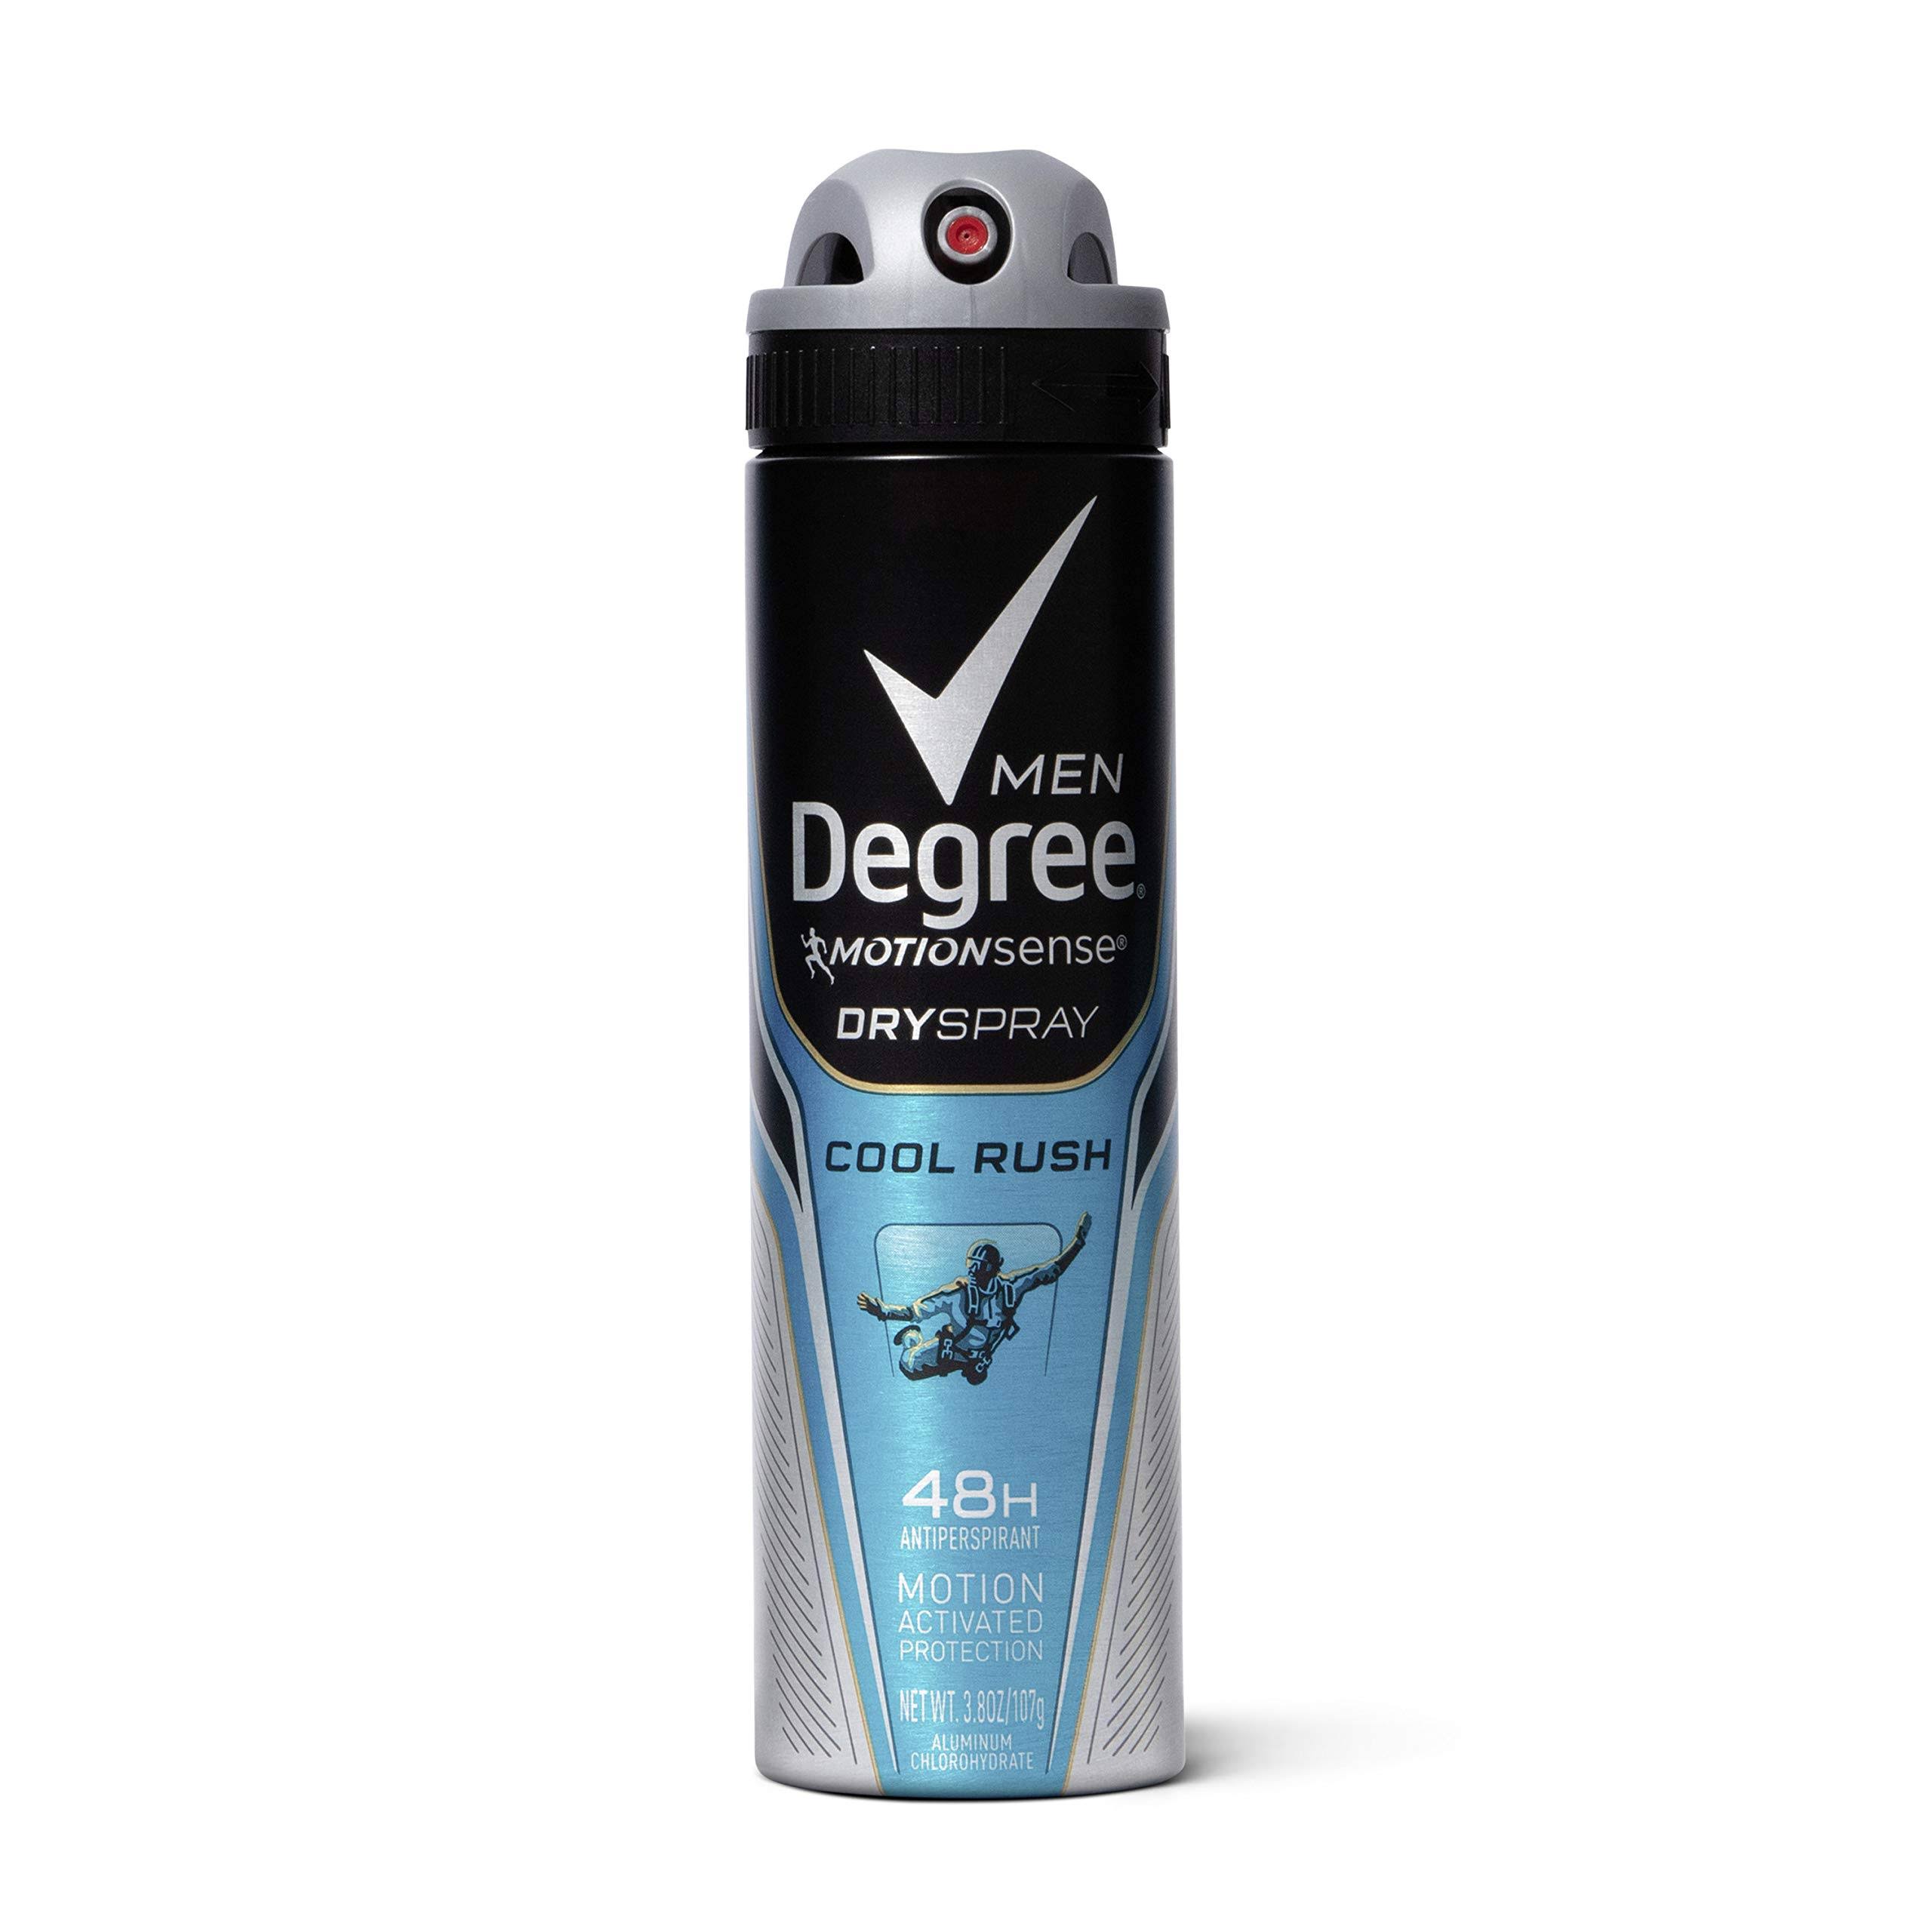 Degree Men Motionsense 48hr Anti Perspirant Dry Spray - Cool Rush, 3.8oz